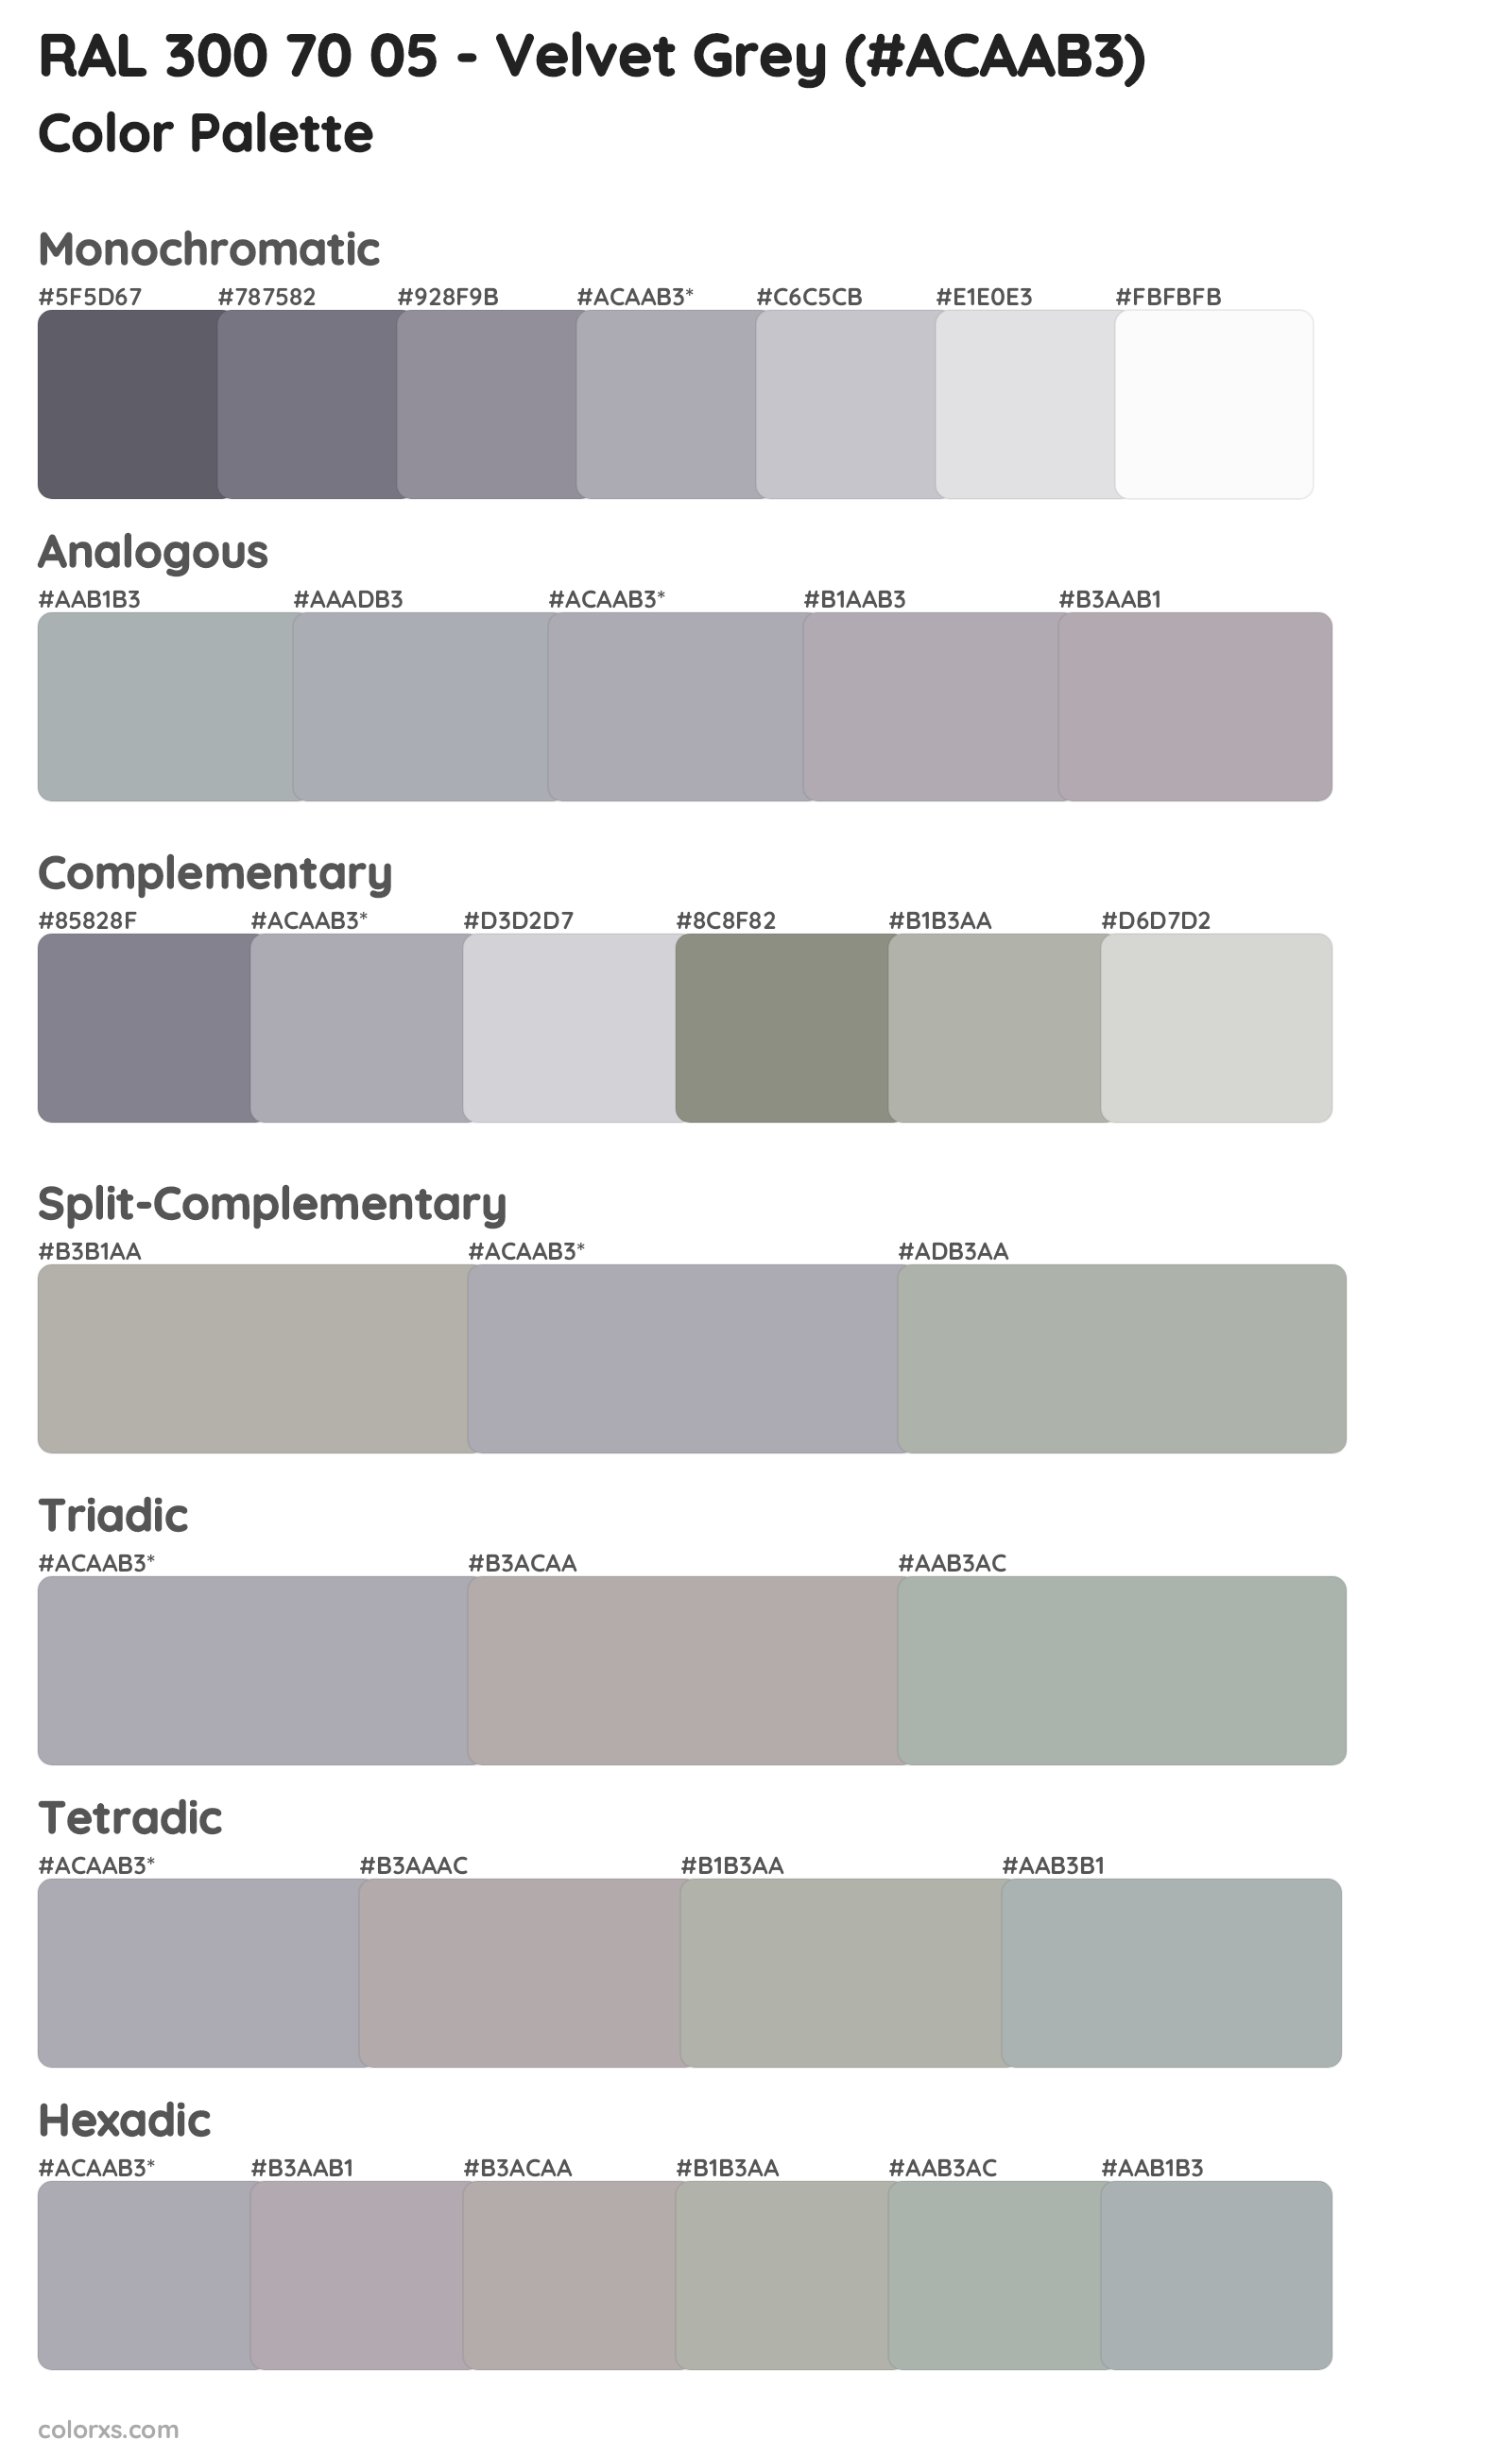 RAL 300 70 05 - Velvet Grey Color Scheme Palettes